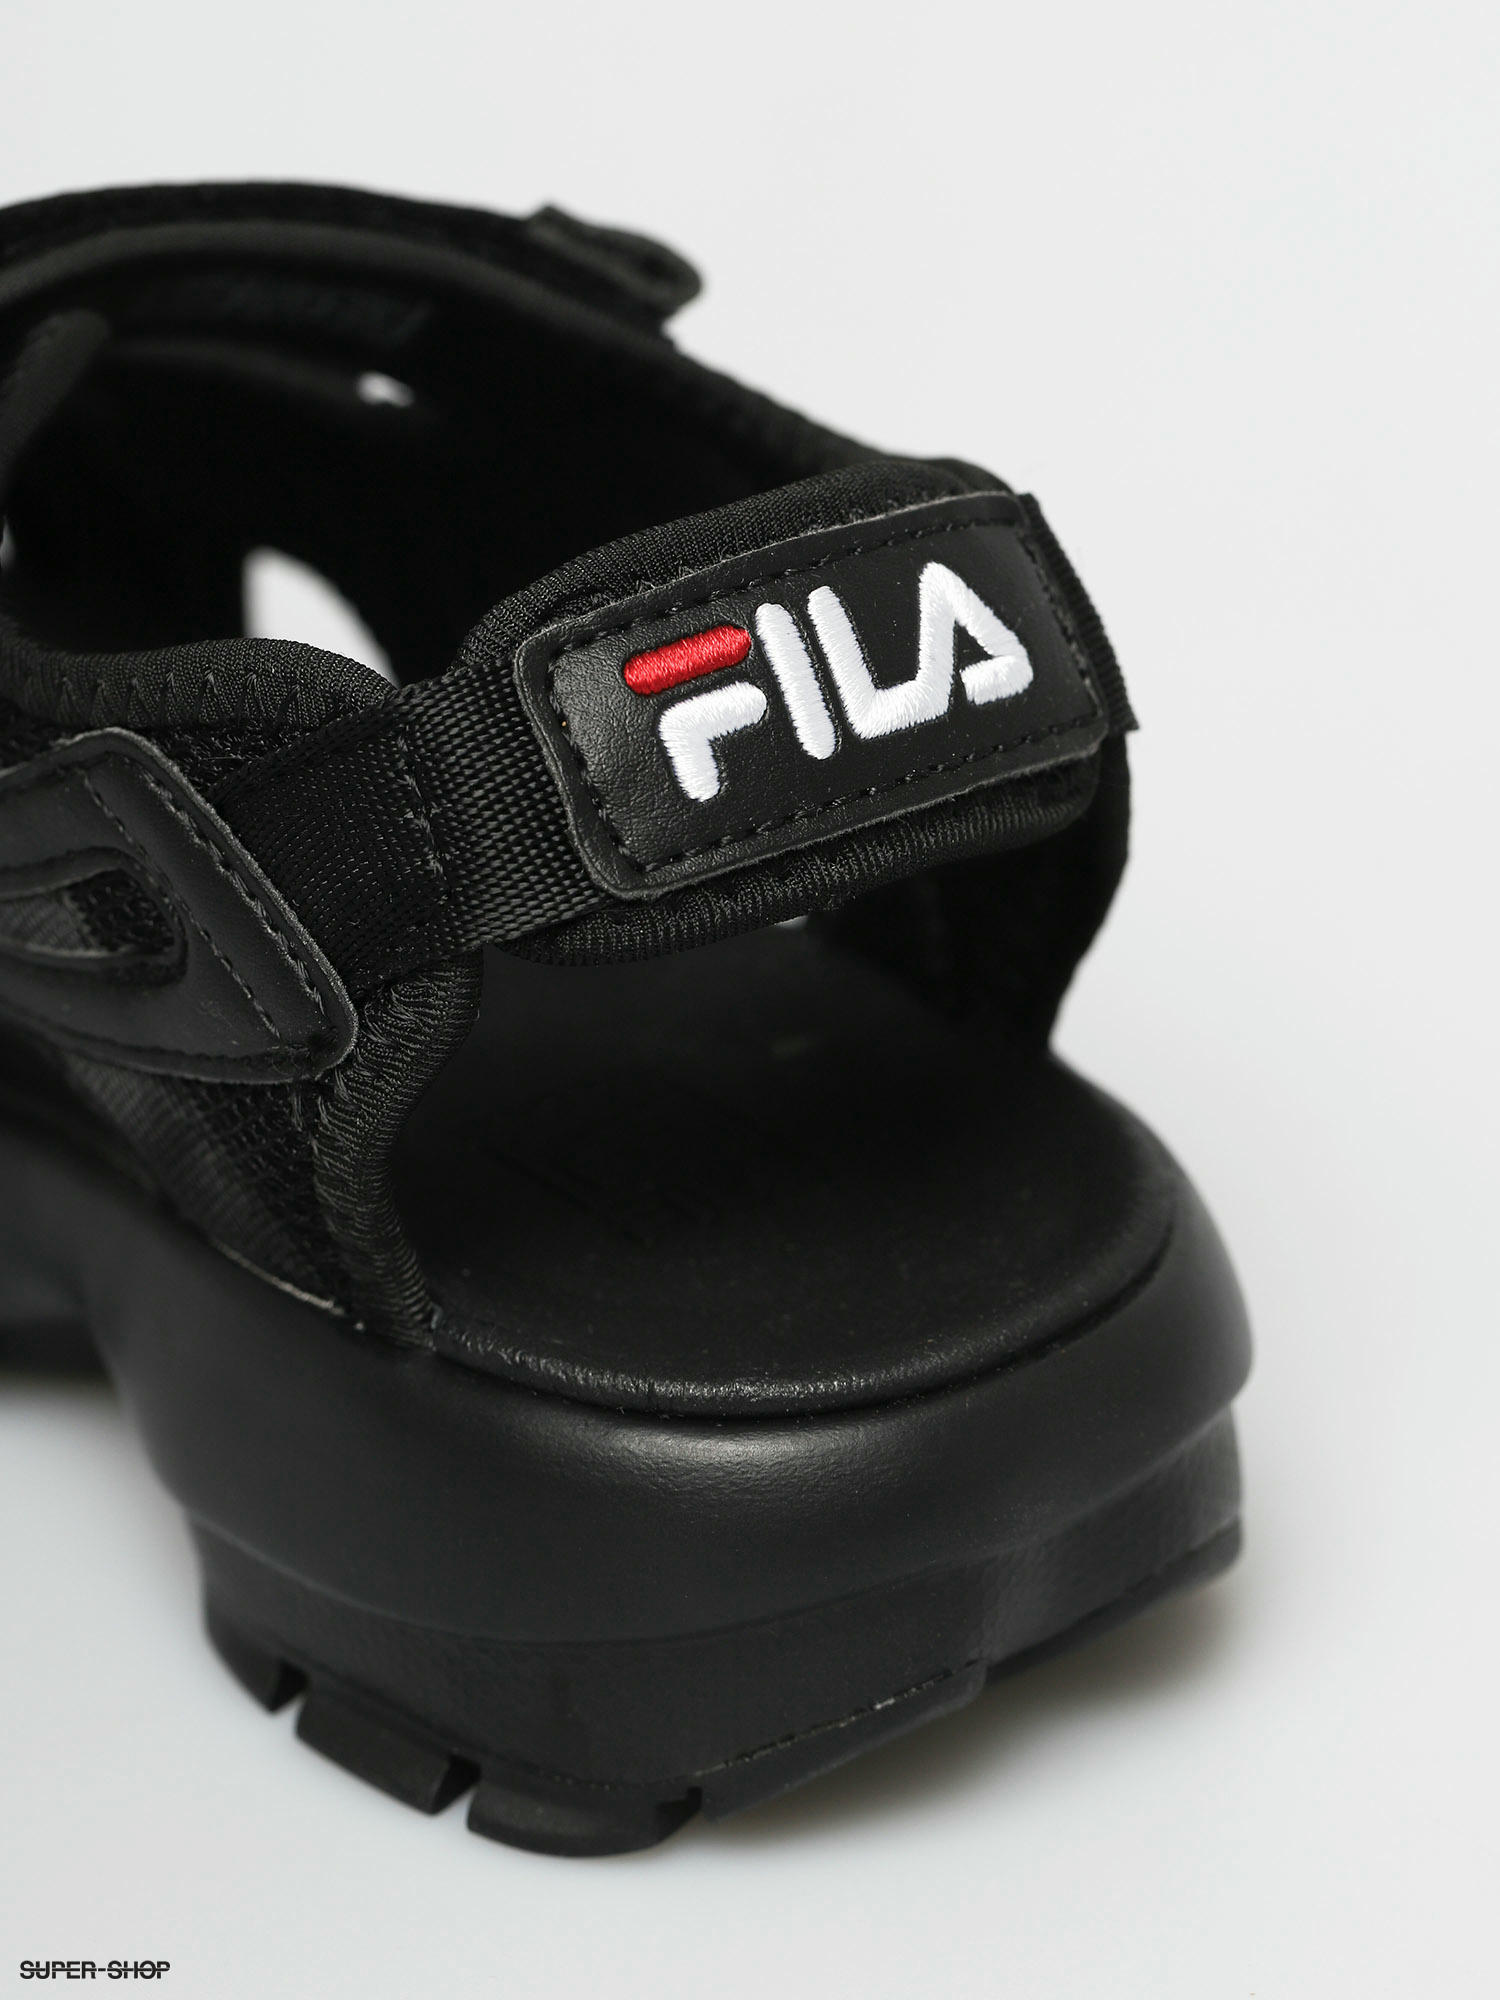 Fila Yak Women's Sandals Triple Black 5sm00542-001 - Walmart.com